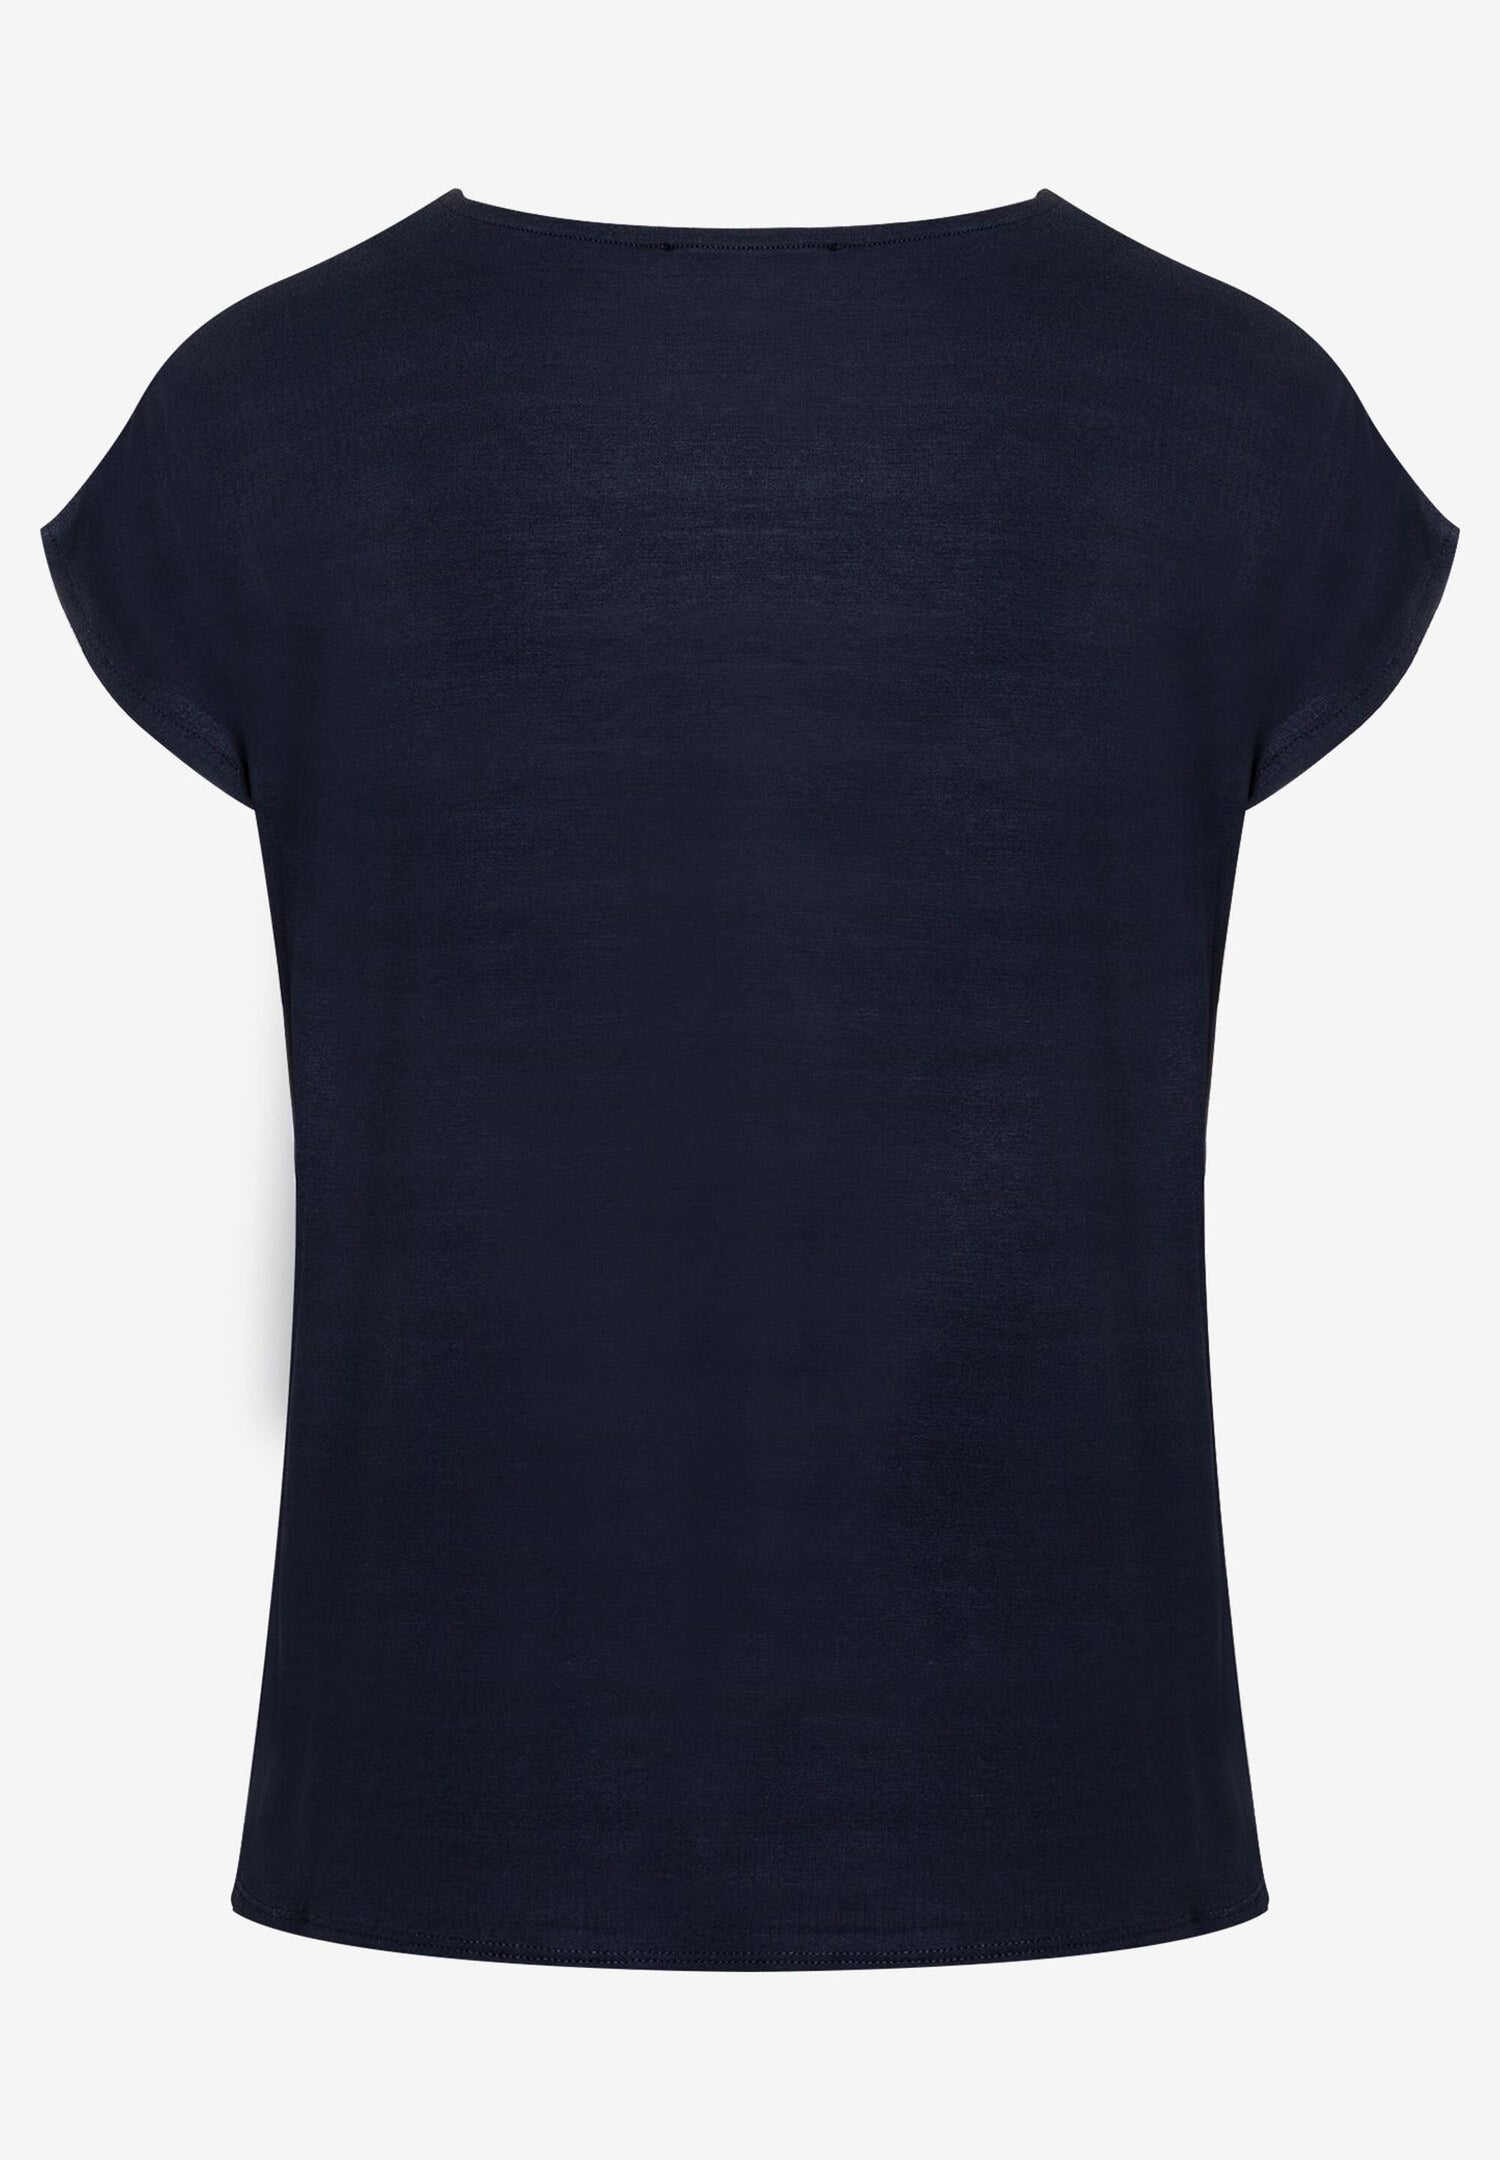 Navy &amp; Light Blue Graphic Print Blouse Shirt_41820470_5309_04